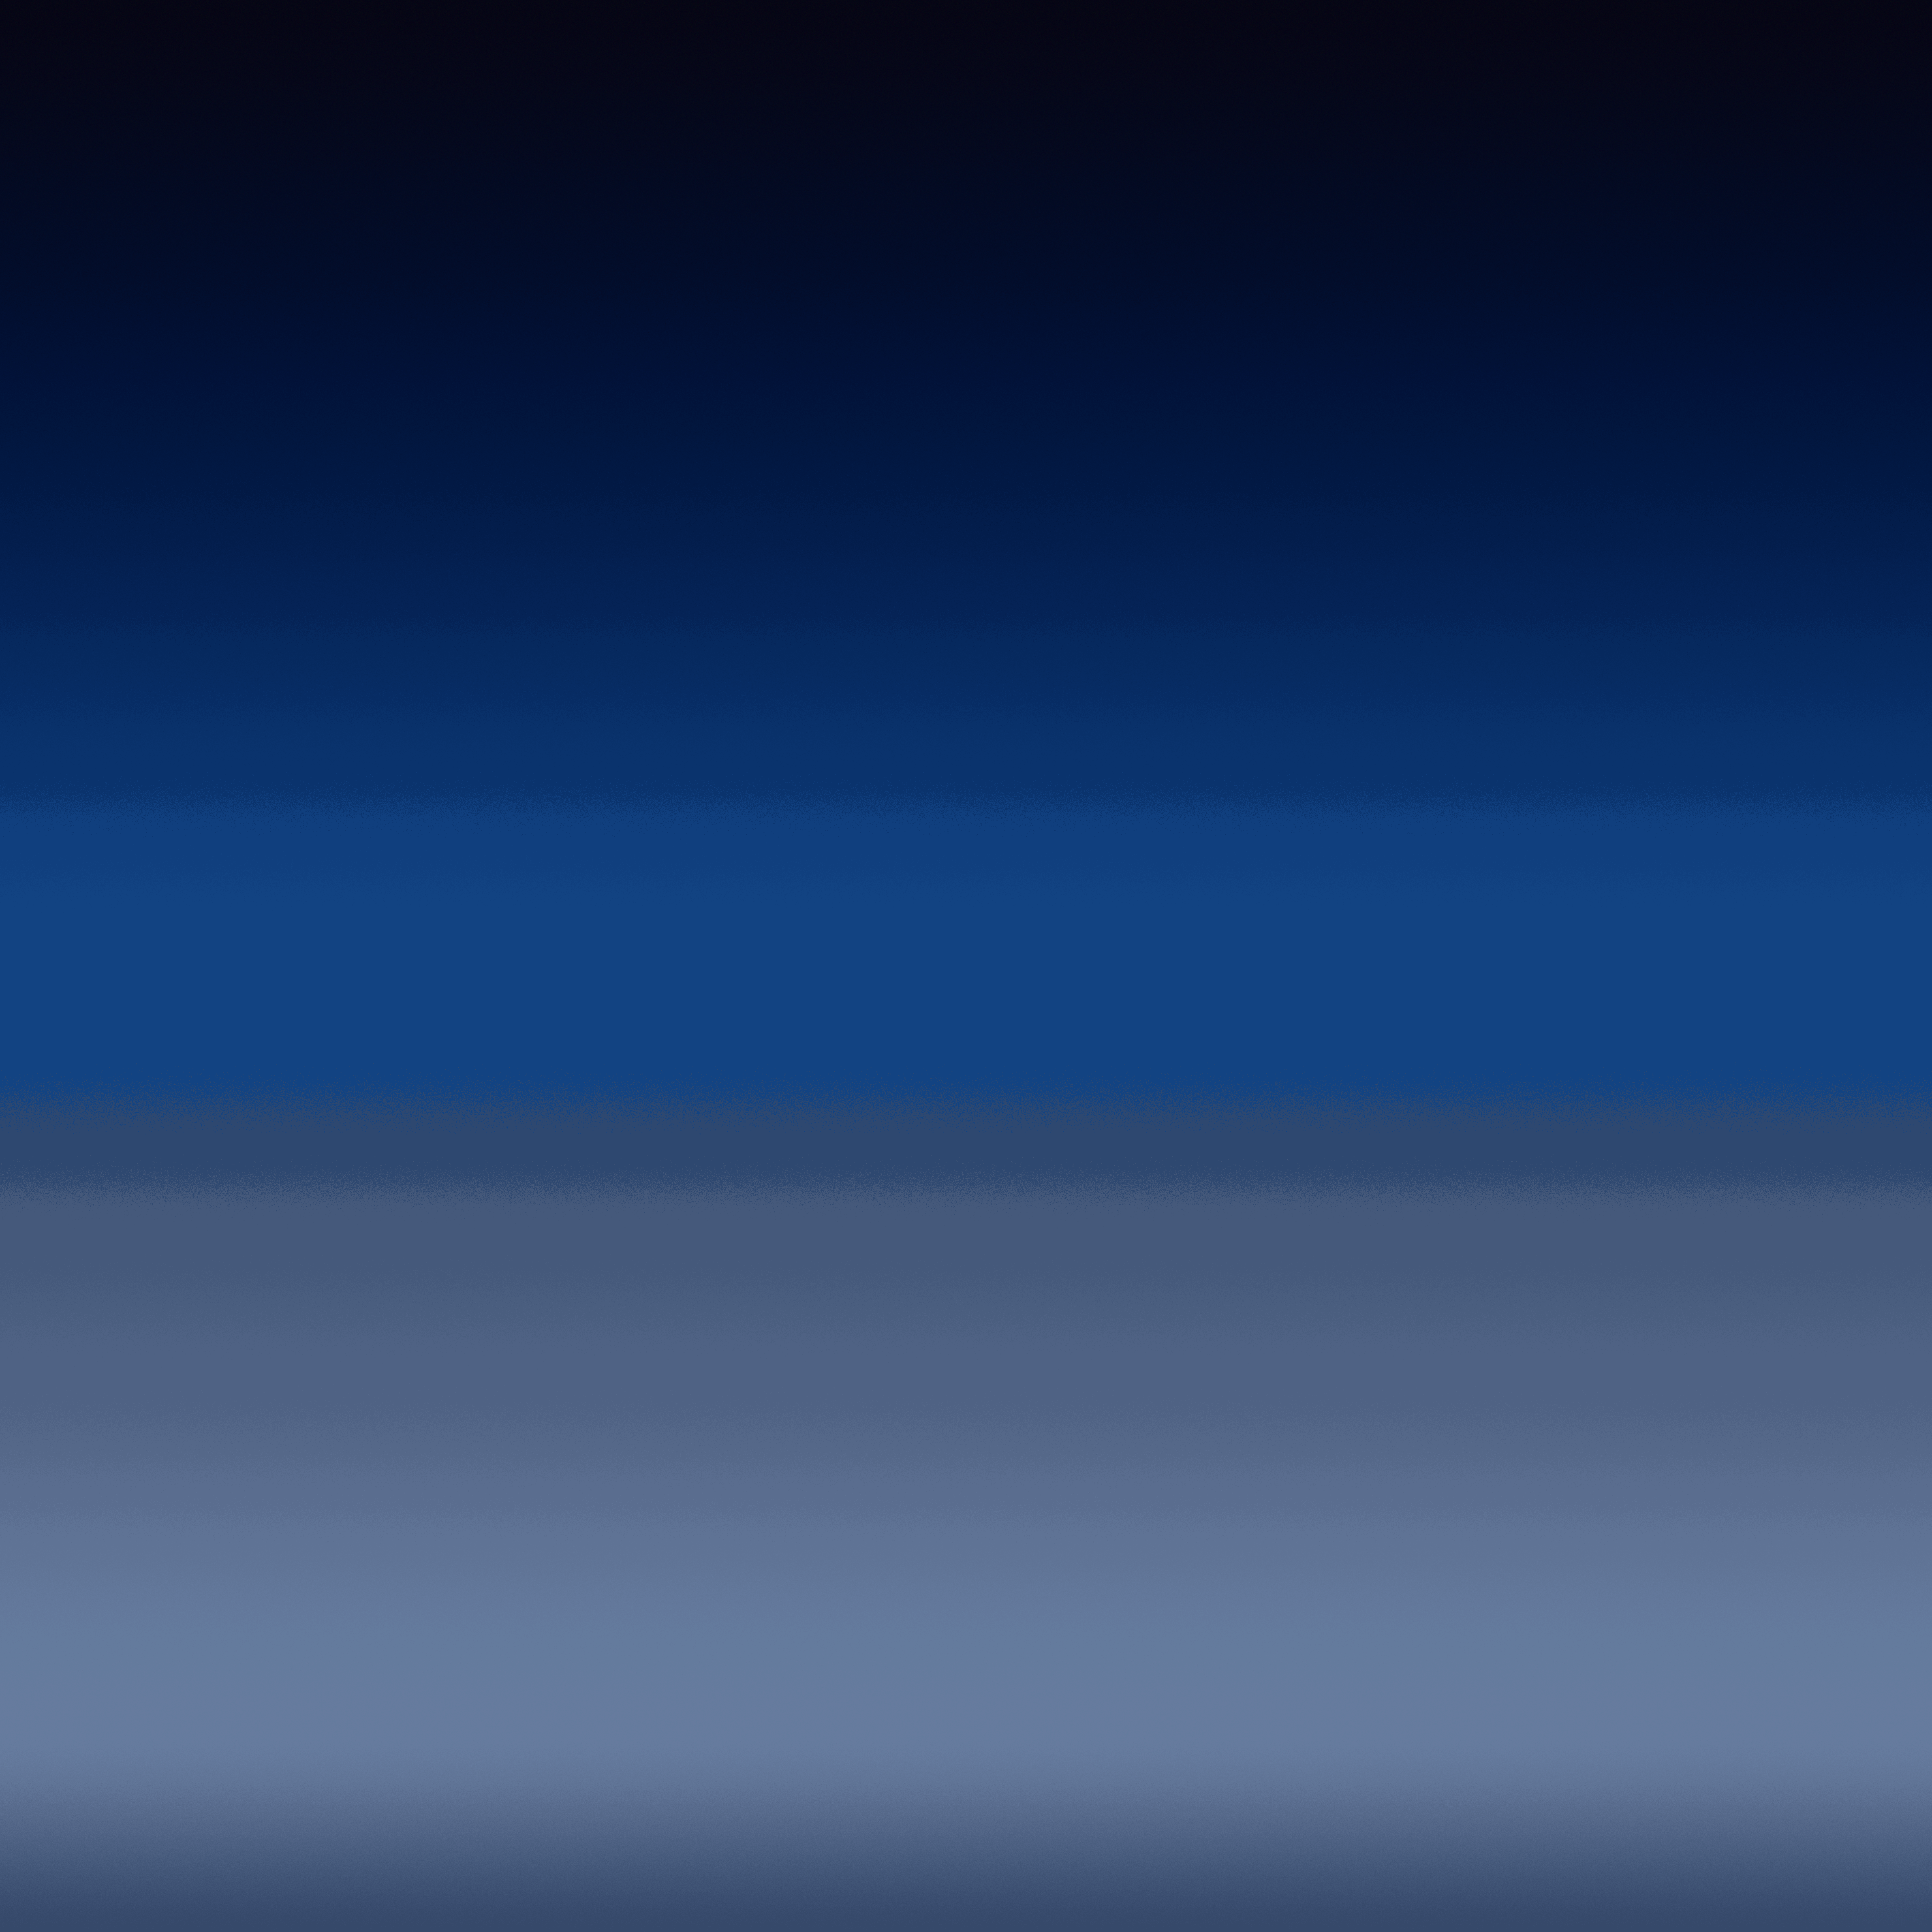 Samsung Galaxy S8 Wallpaper Blue Sky Daytime Atmosphere Horizon 7712 Wallpaperuse